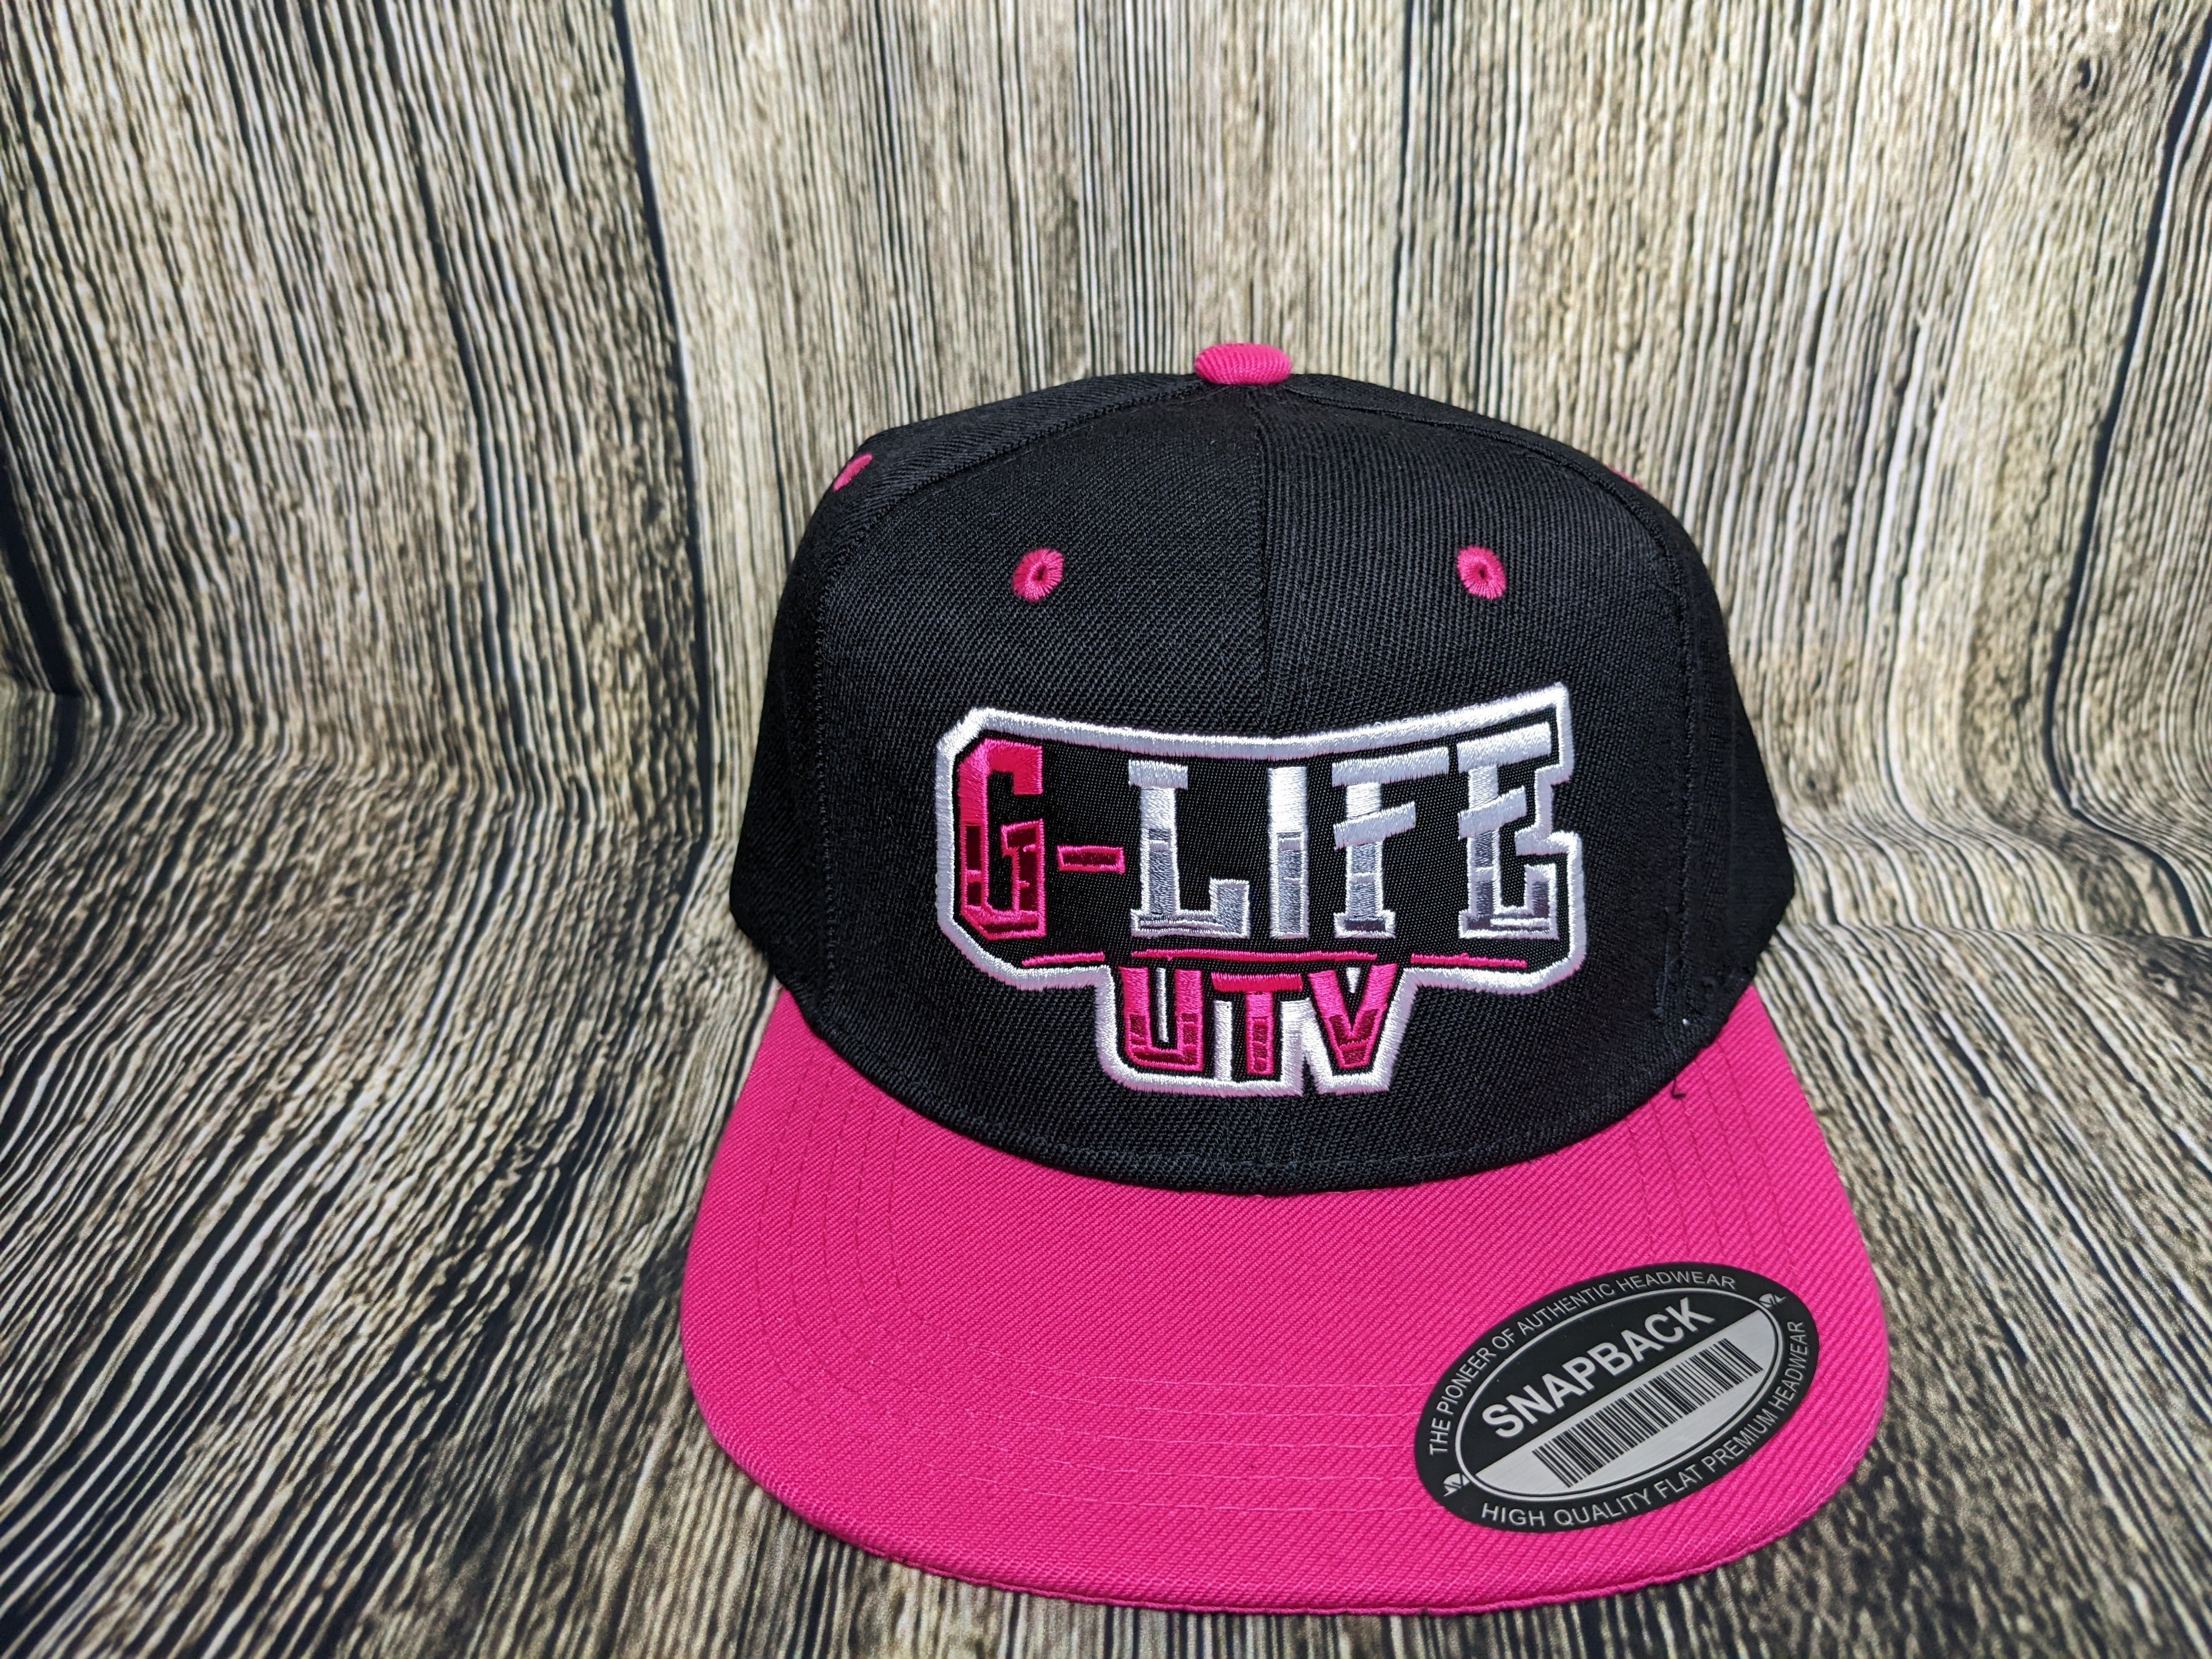 G Life UTV - Black/Pink Snapback Hat